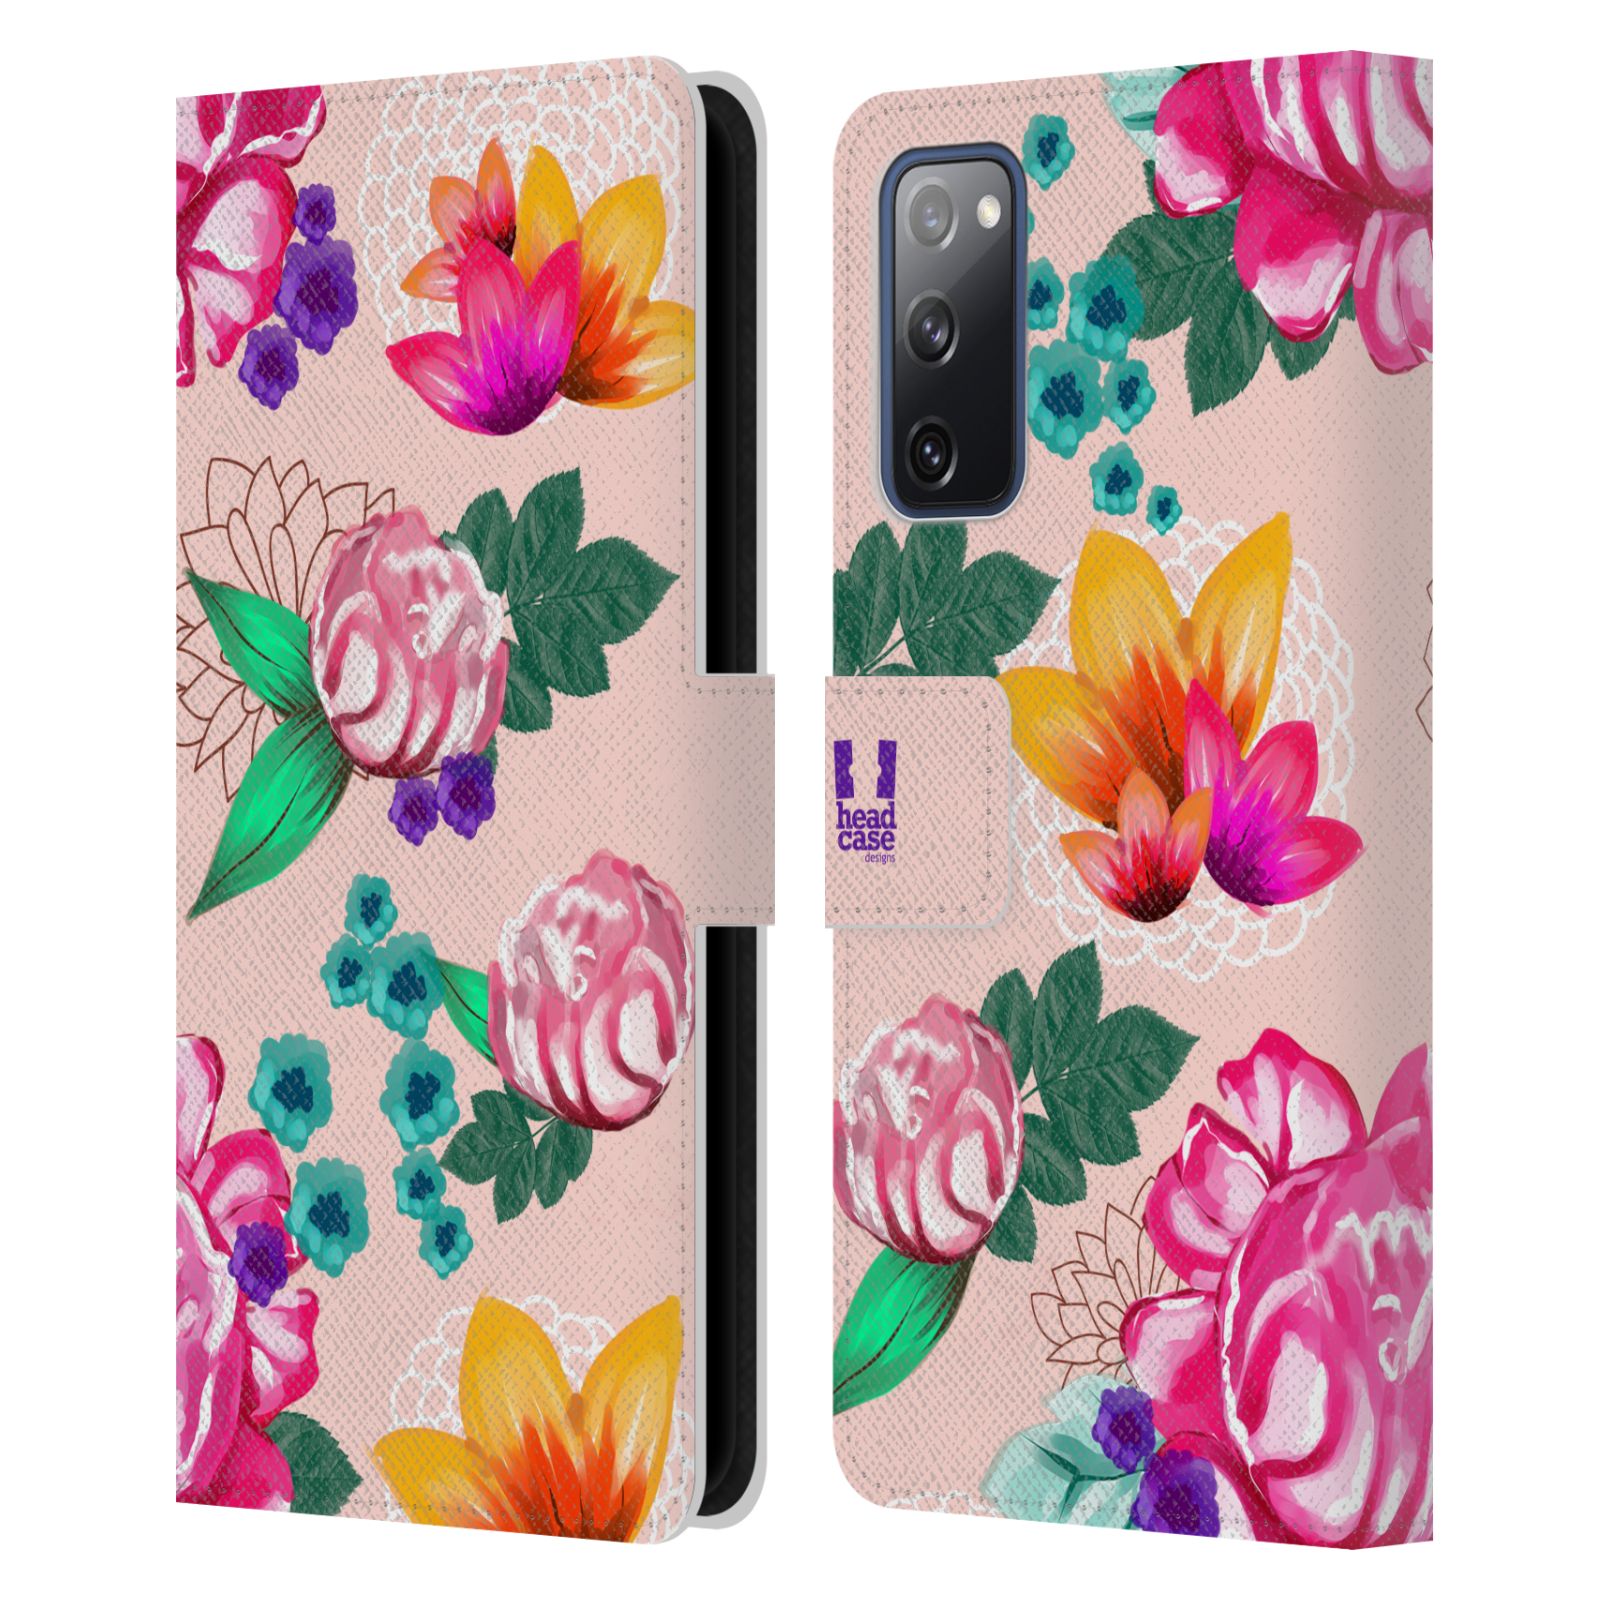 Pouzdro HEAD CASE na mobil Samsung Galaxy S20 FE / S20 FE 5G barevné kreslené květiny růžová